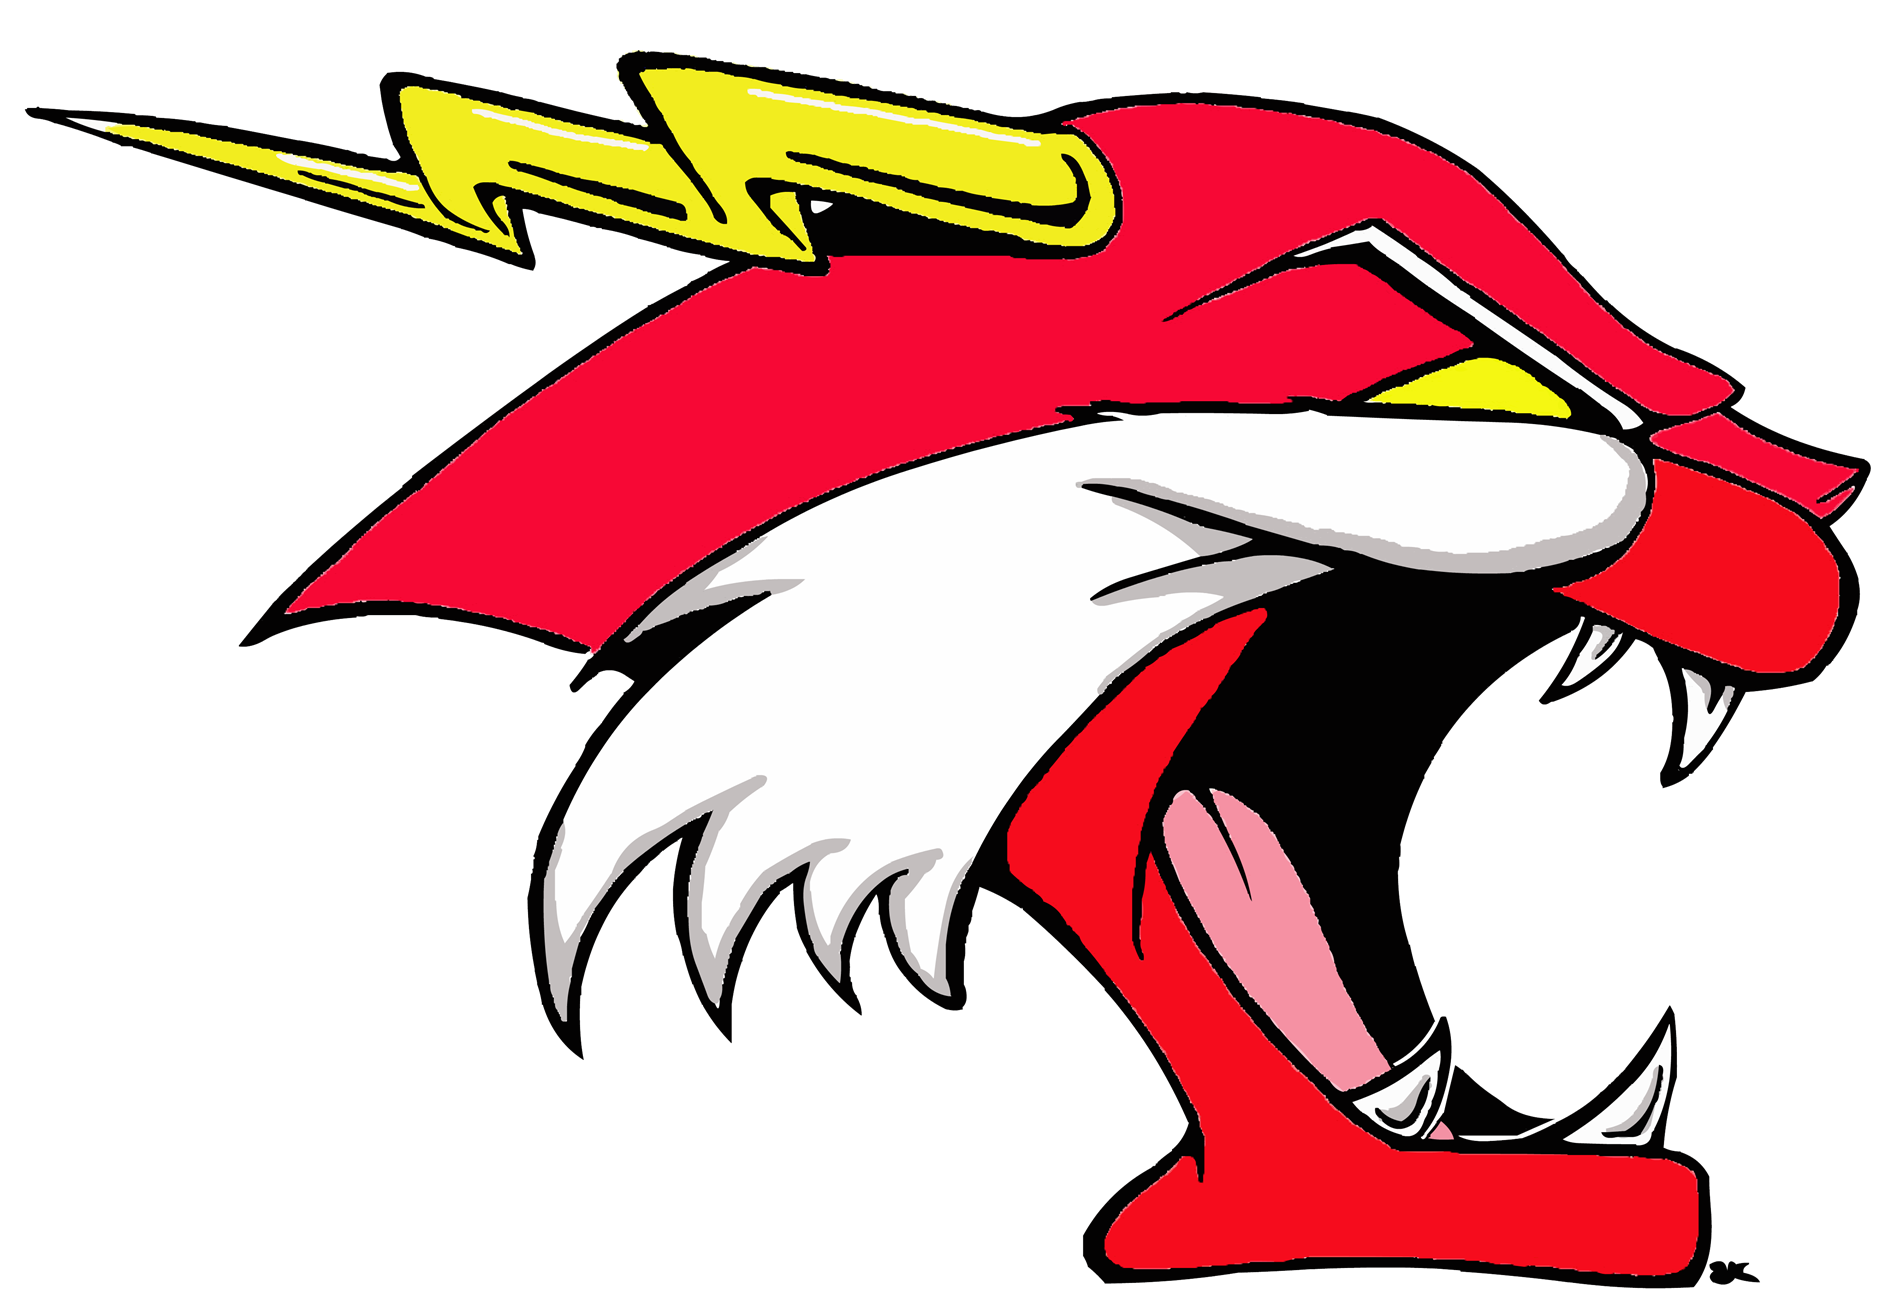 Thunderbolt Middle School logo - Thundercat mascot